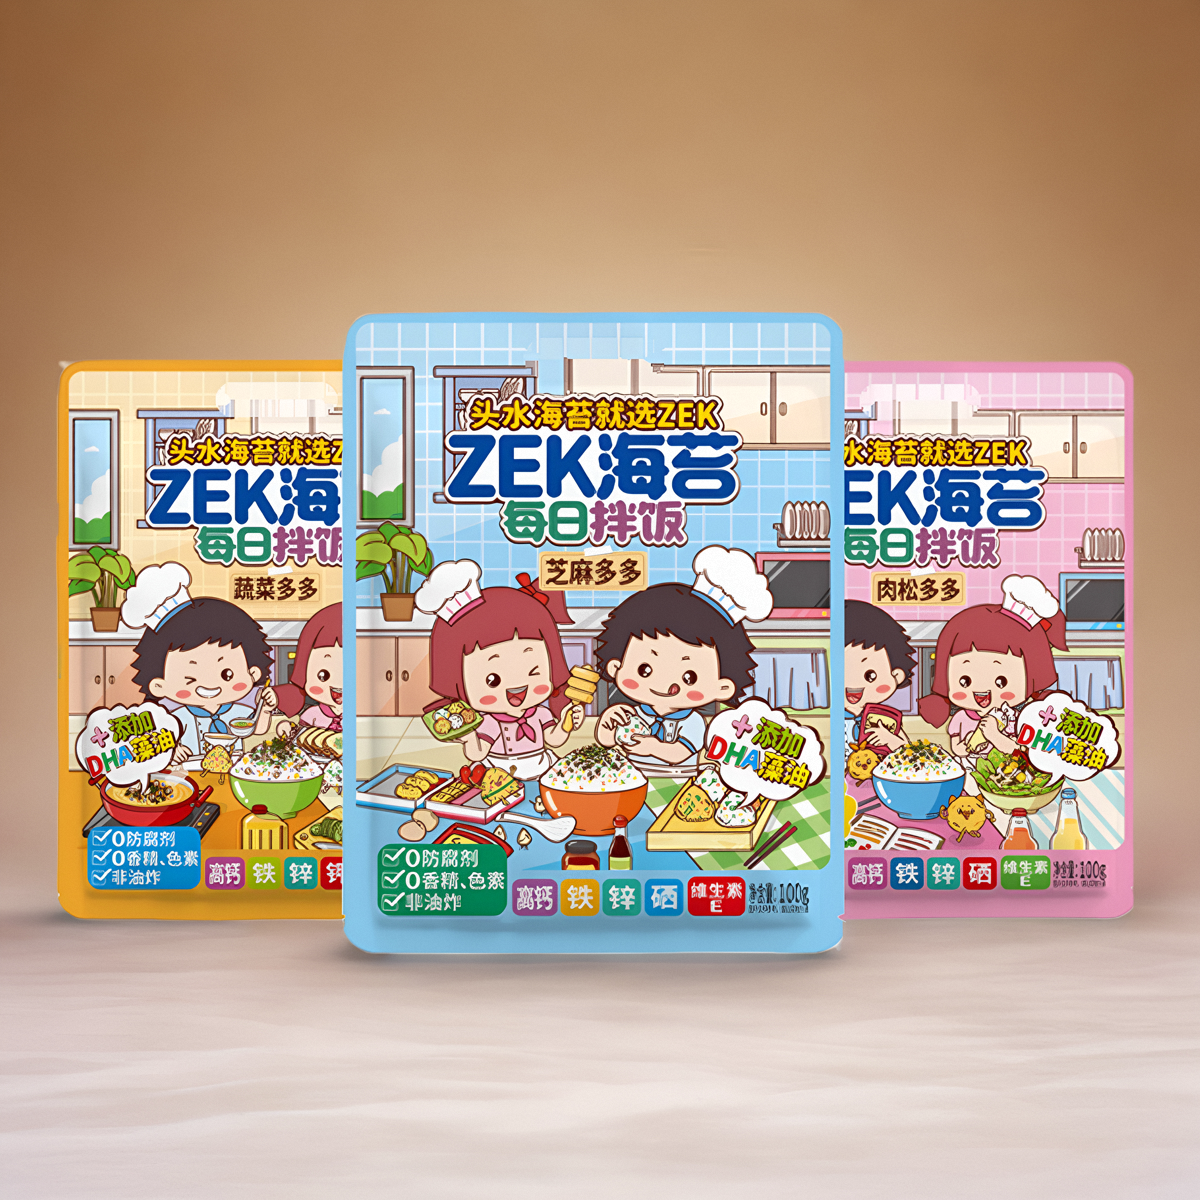 ZEK每日拌饭海苔原味100g 10包芝麻拌饭肉松味海苔碎紫菜海味零食